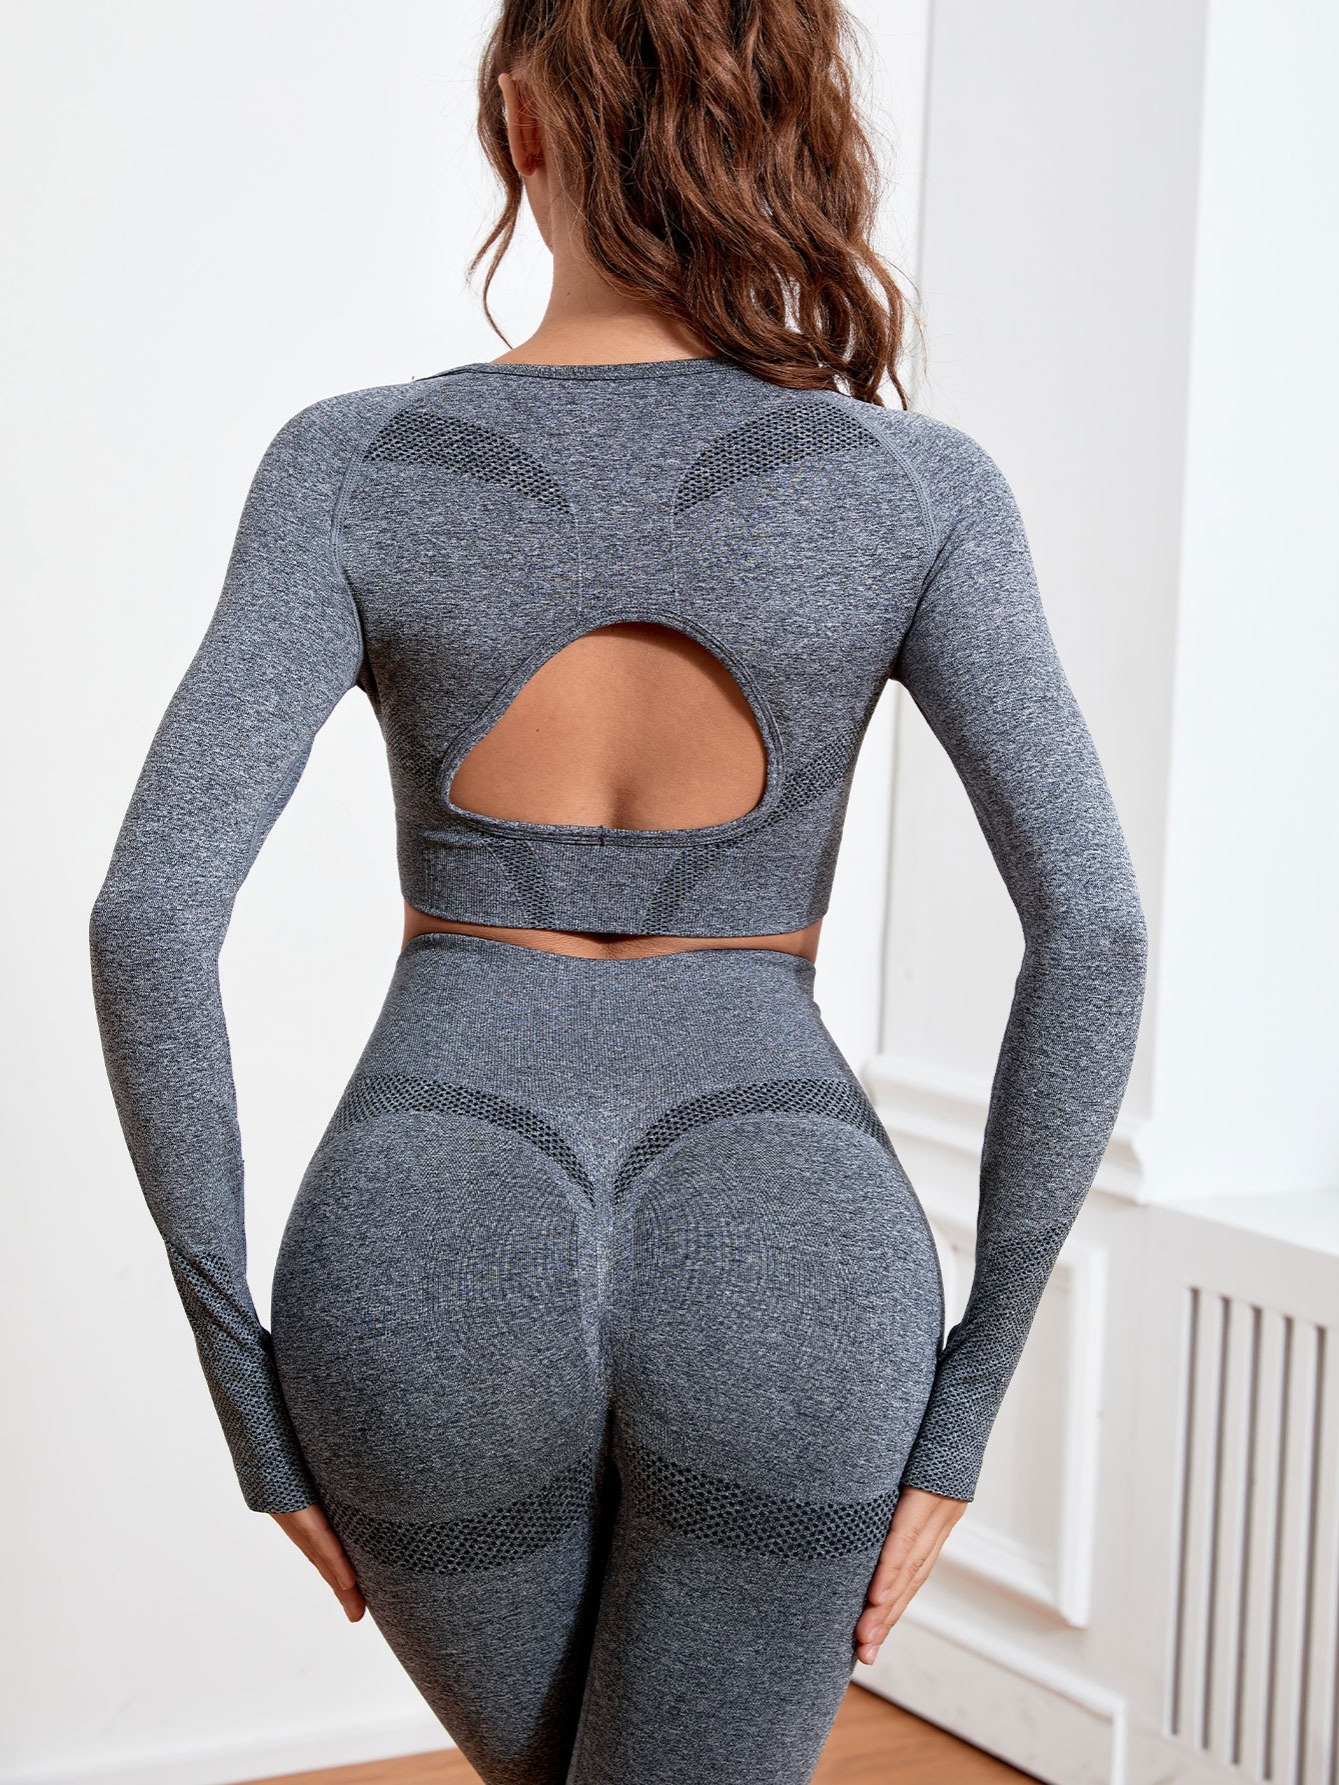 Stylishine Women Seamless Long Sleeve Bodycon Crop Tops Stretch Yoga  Athletic Shirts Control Workout Gym Black Small